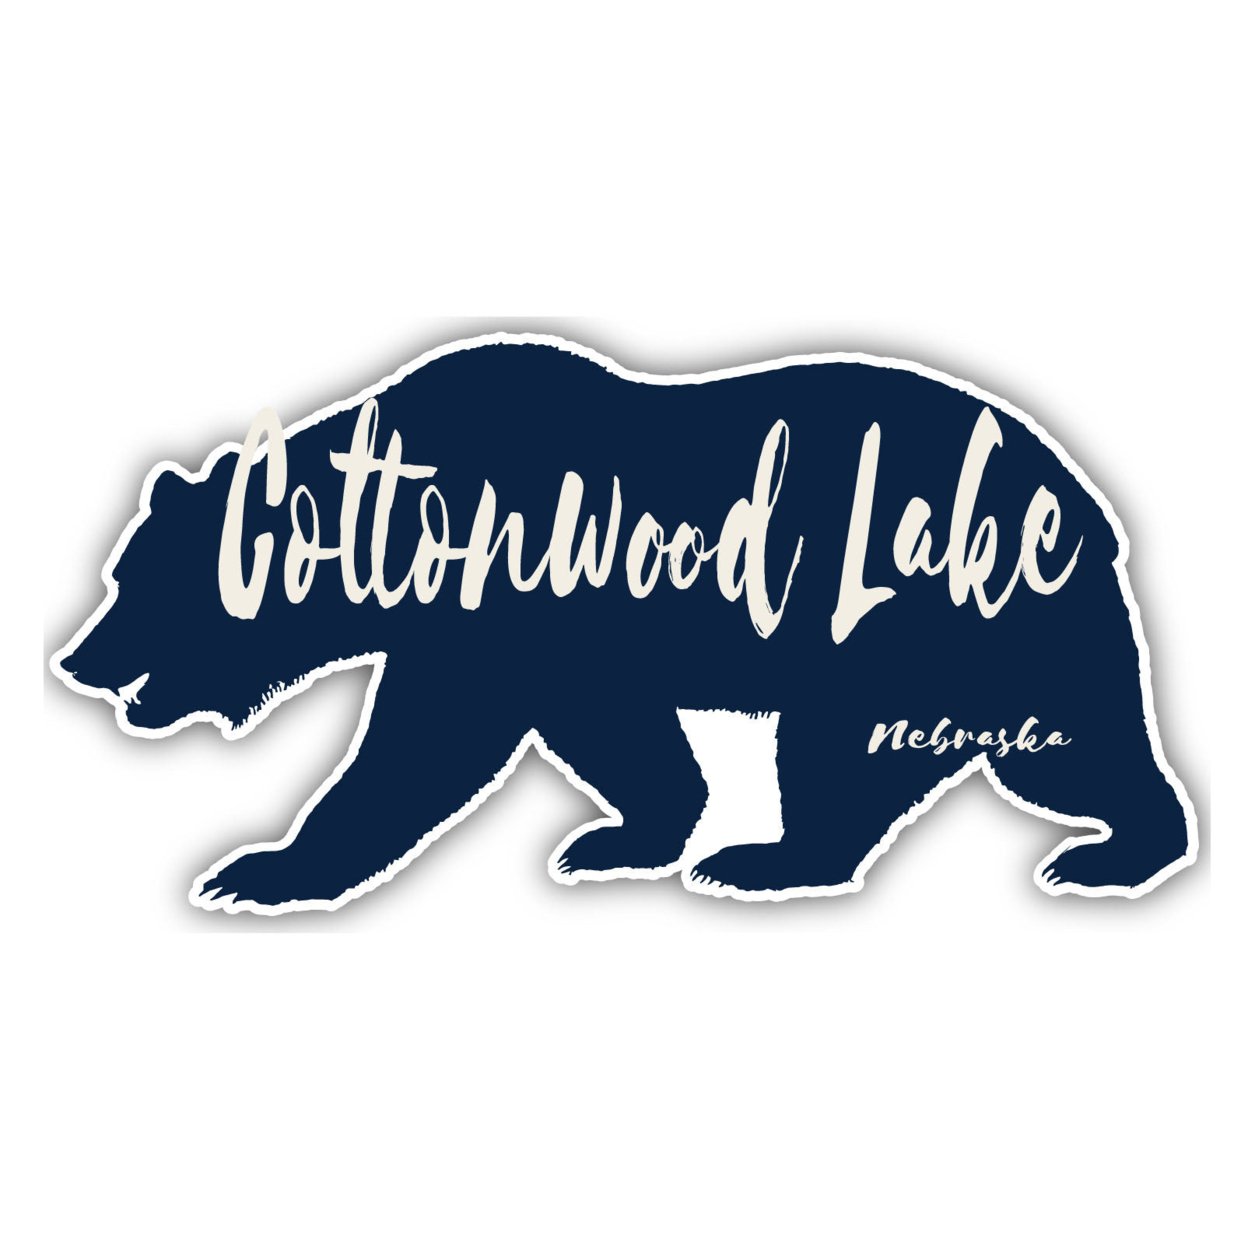 Cottonwood Lake Nebraska Souvenir Decorative Stickers (Choose Theme And Size) - 4-Pack, 4-Inch, Bear